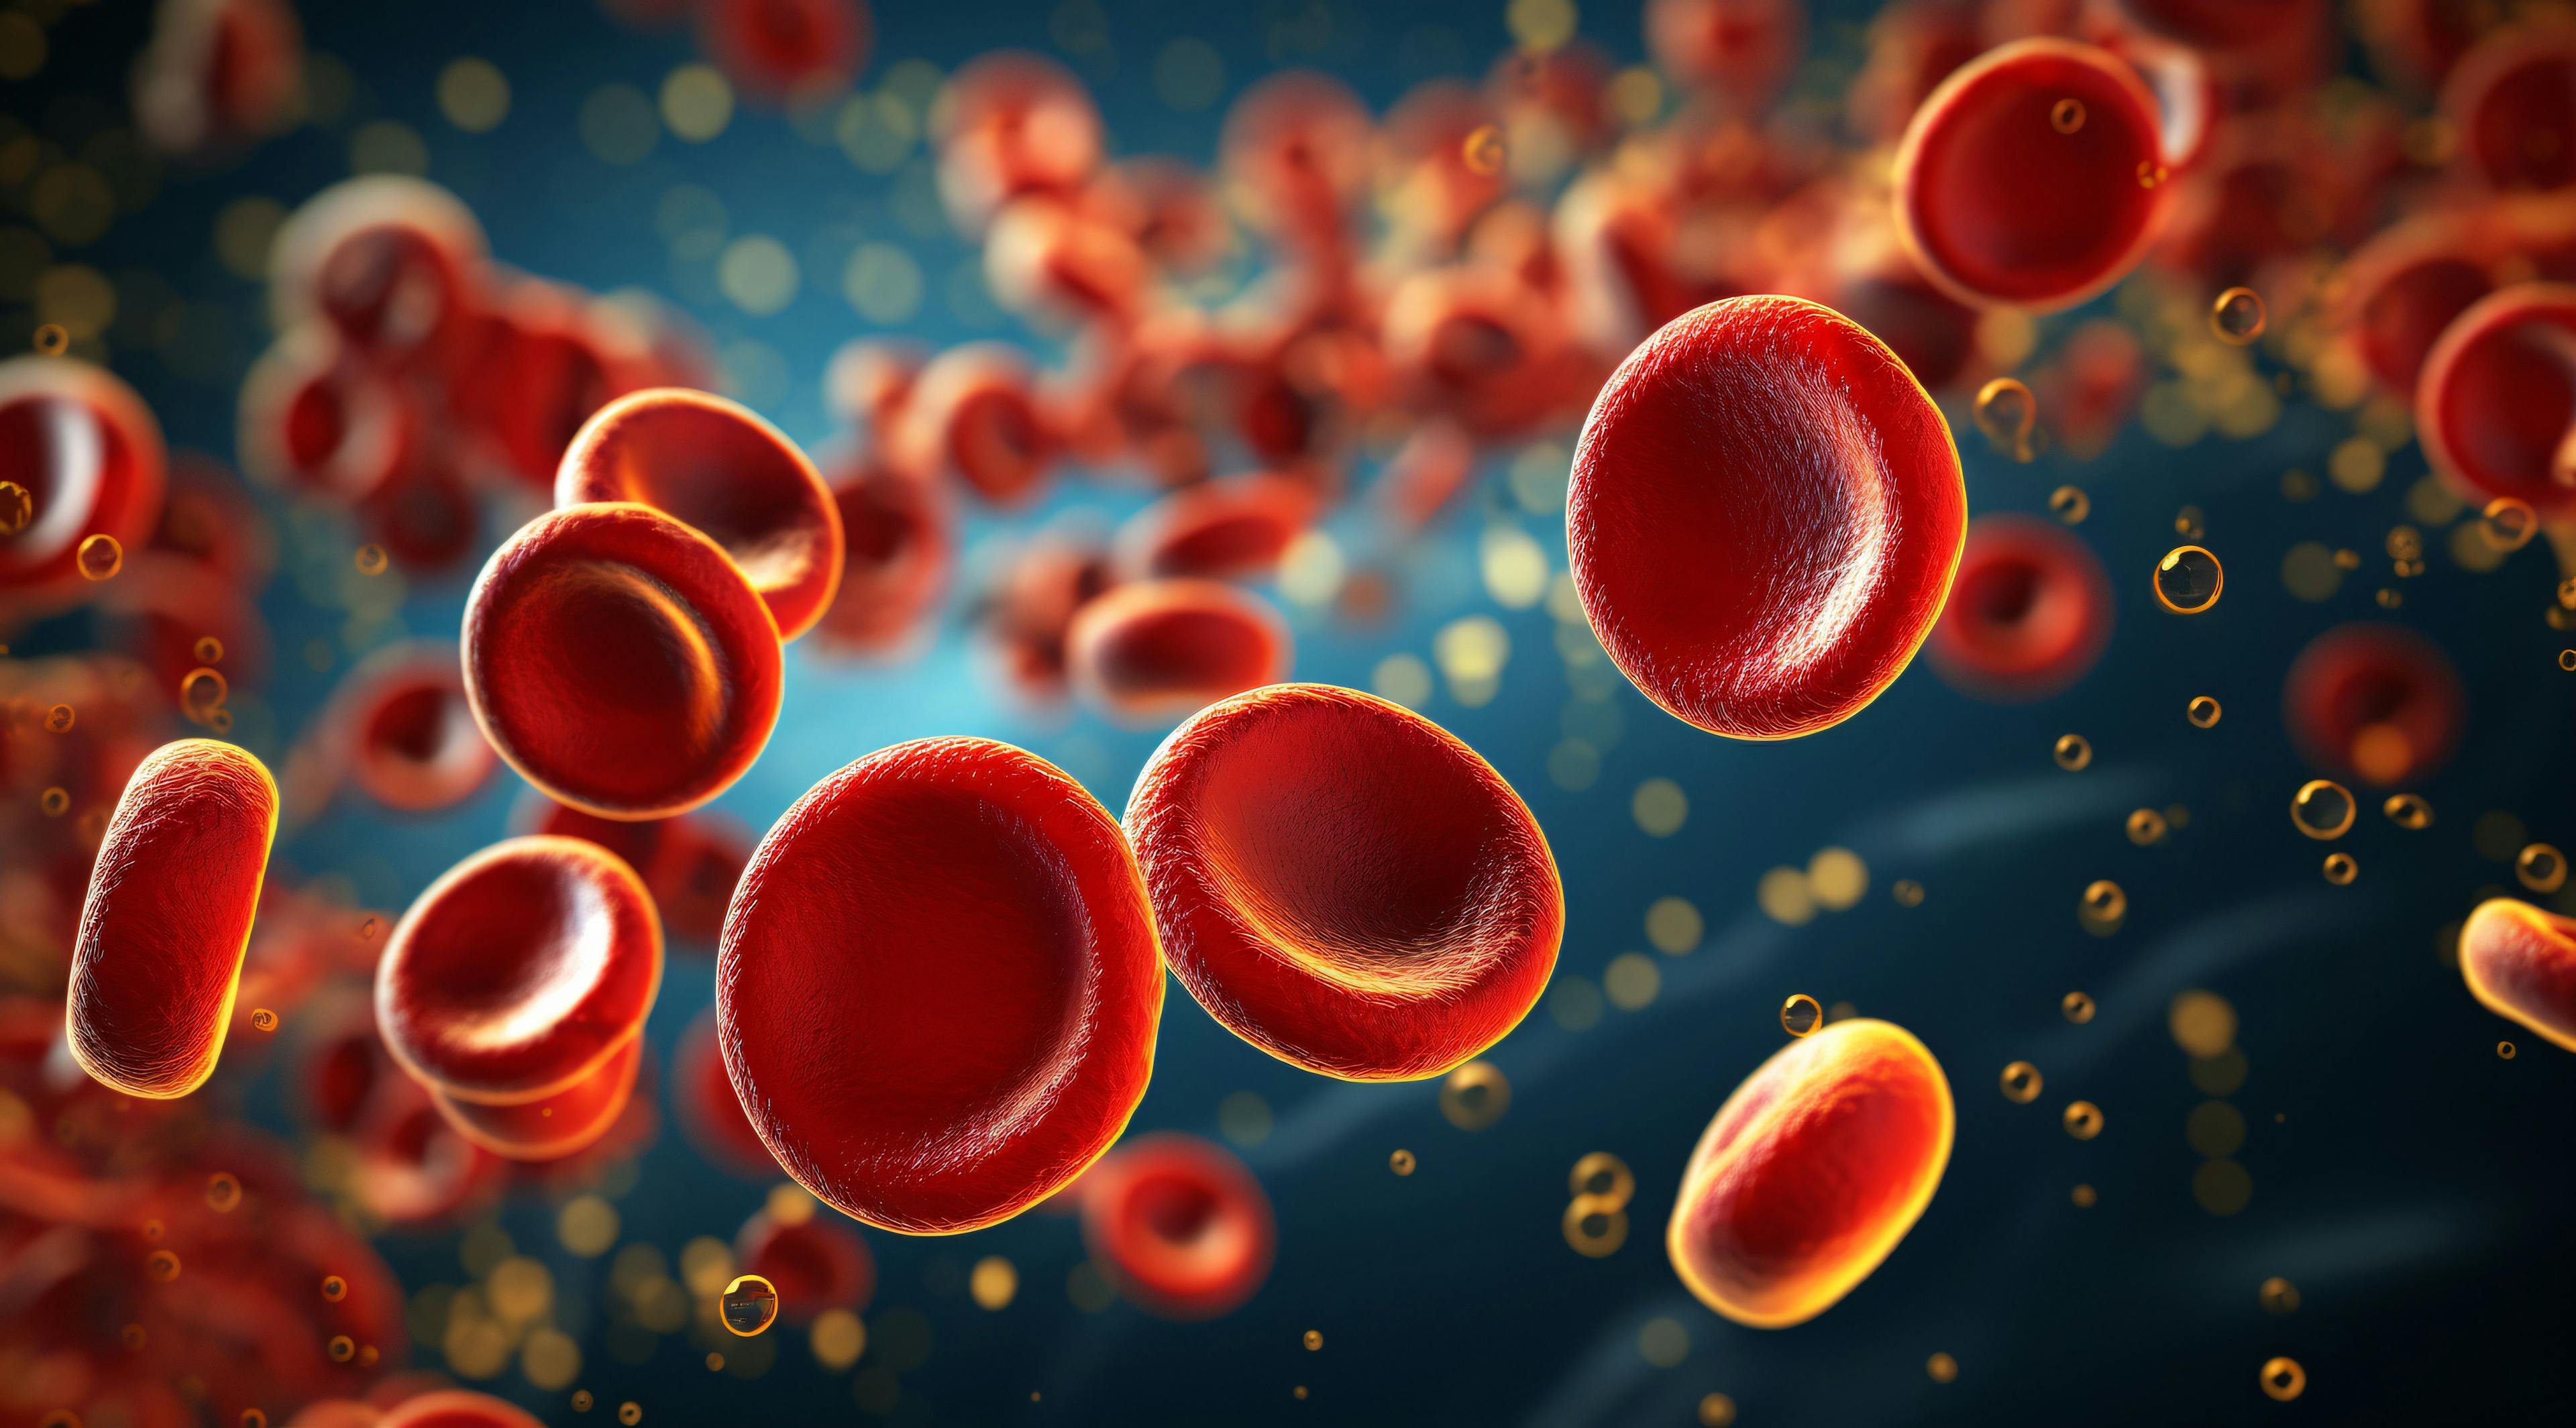 3D rendering of red blood cells flowing: © Kodjovi - stock.adobe.com